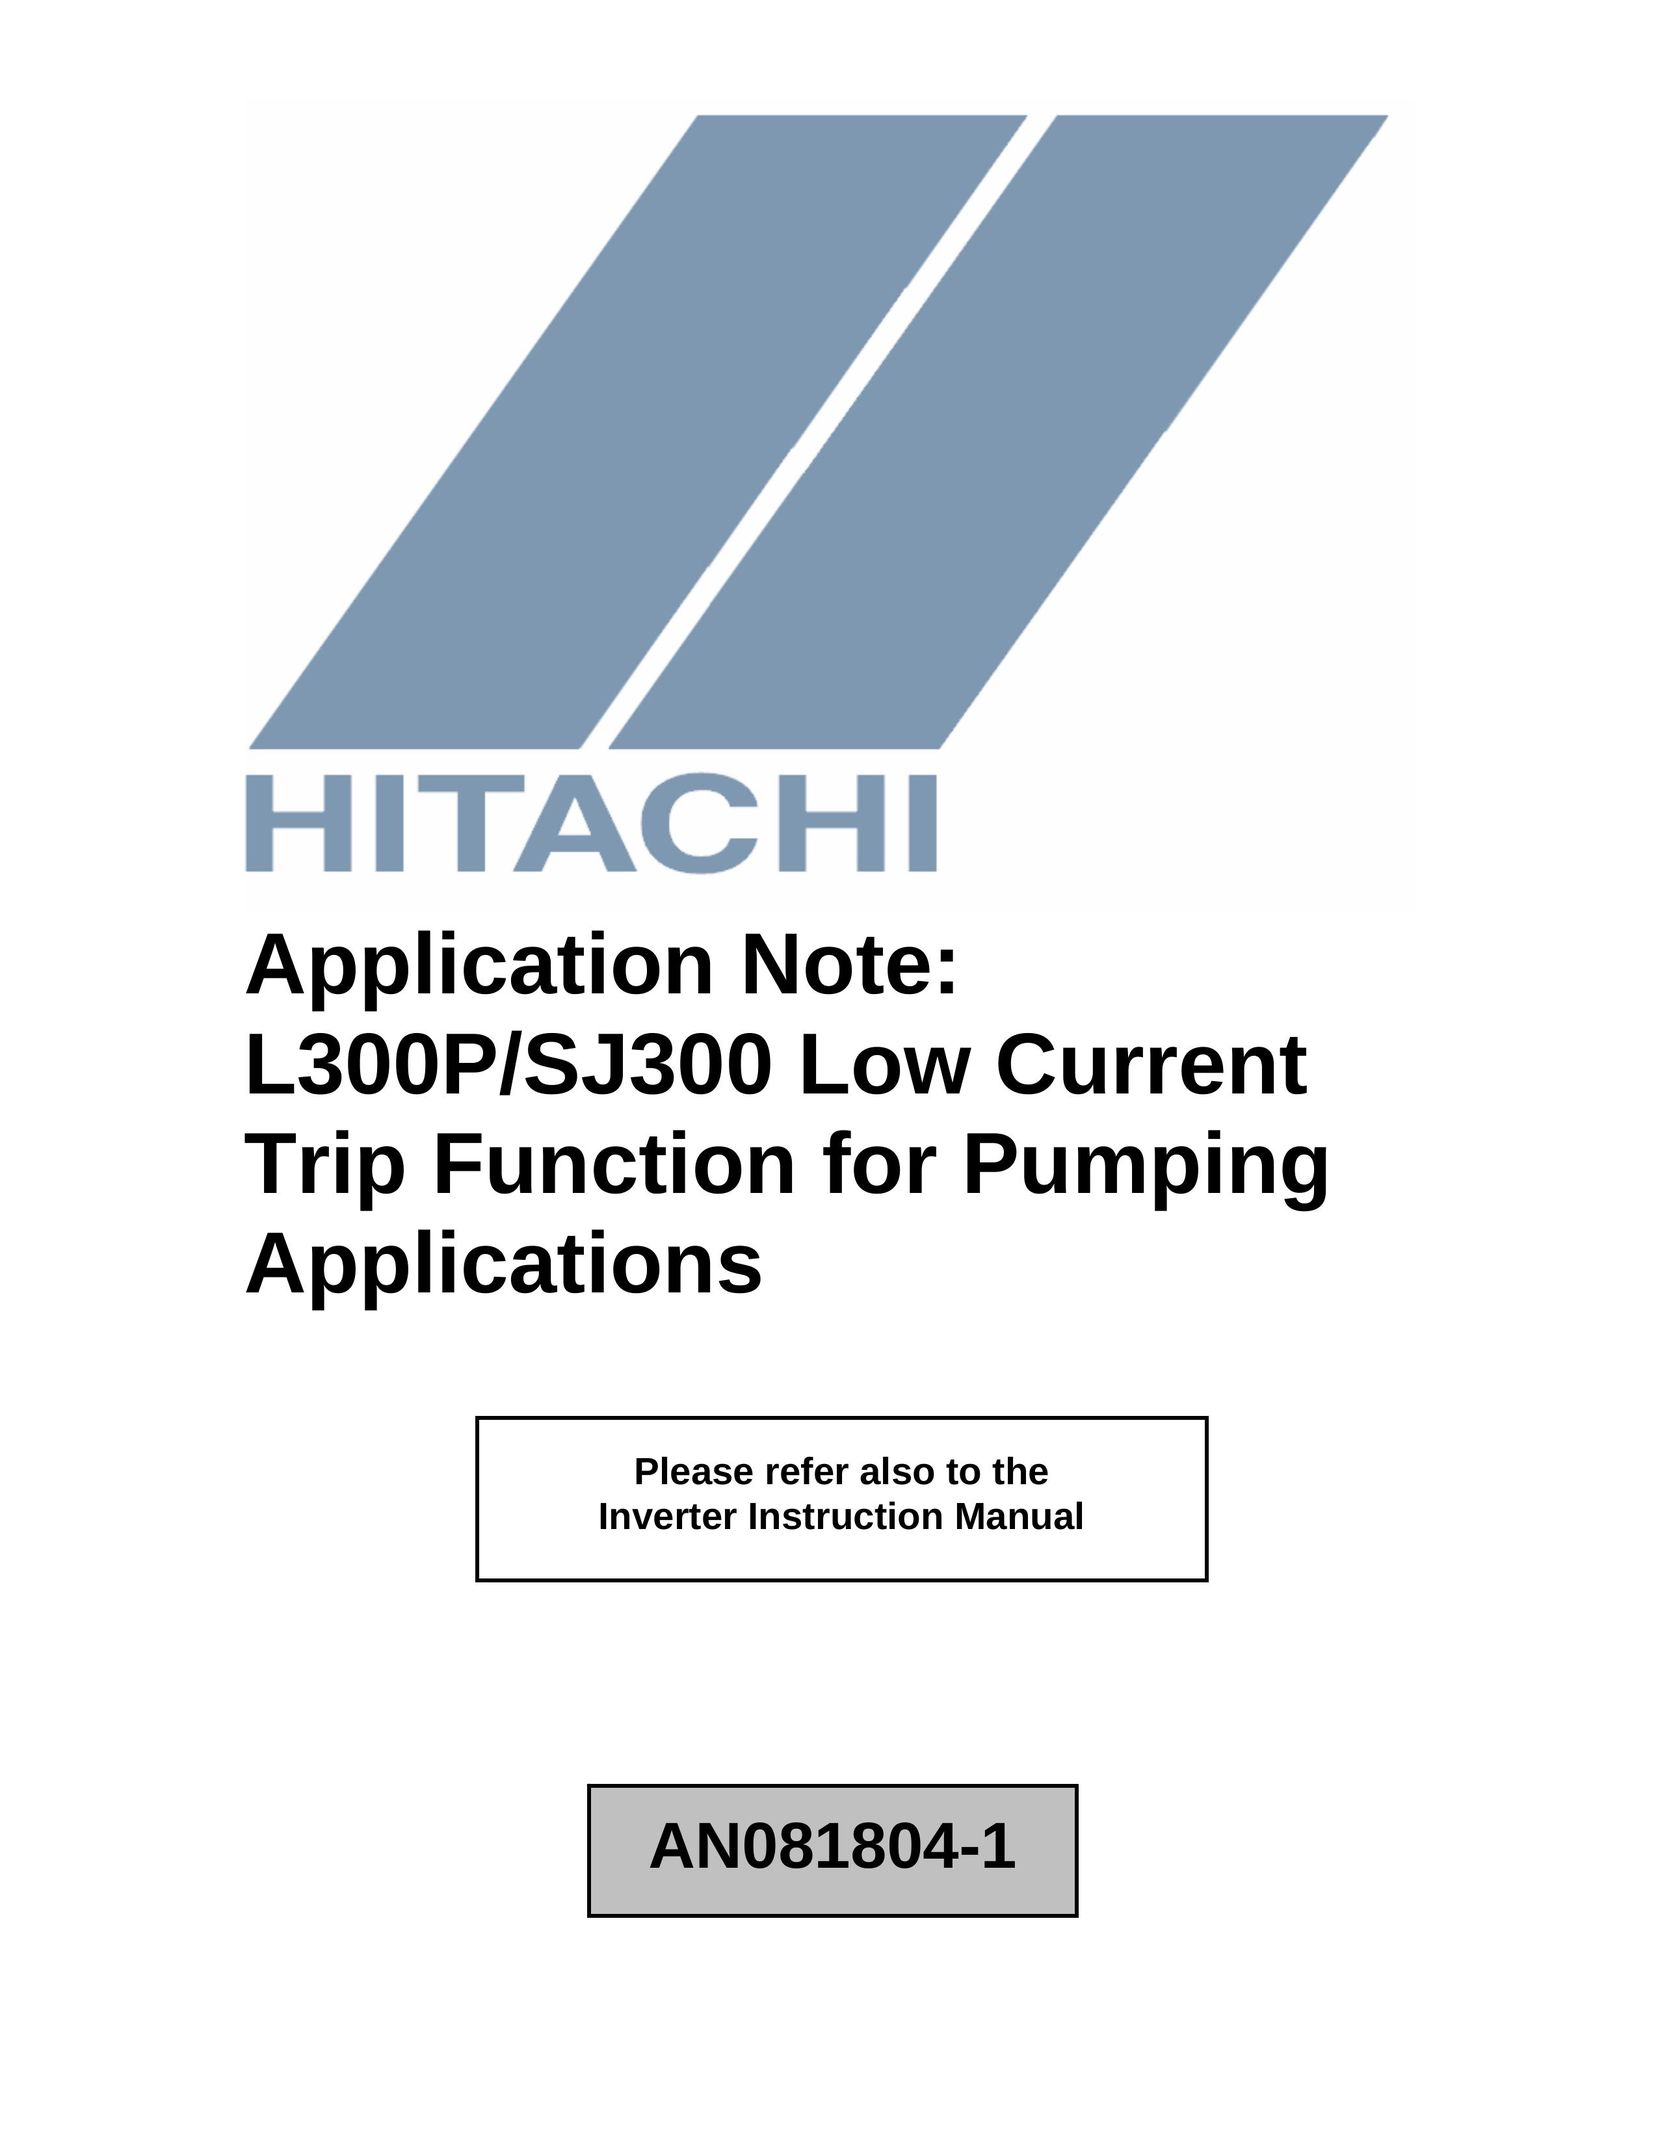 Hitachi hitachi low current trip function for pumping applications Heat Pump User Manual